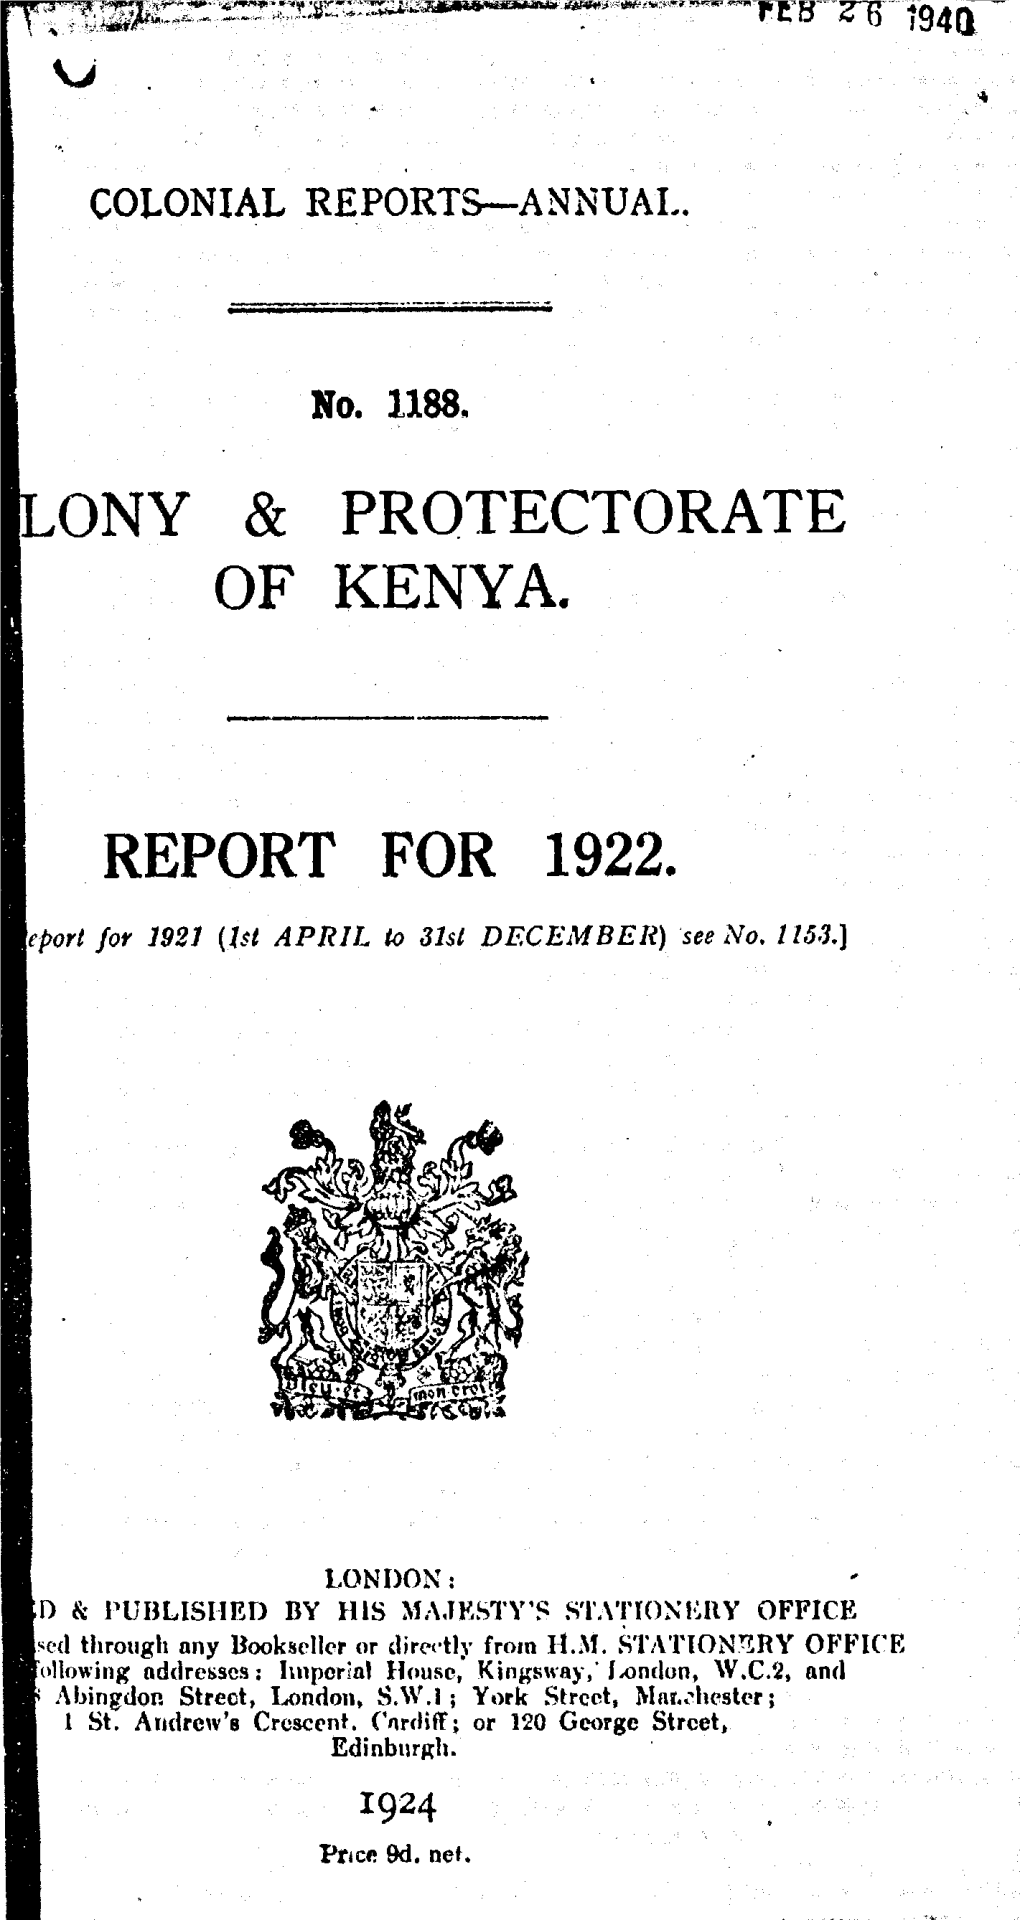 Annual Report of the Colonies, Kenya, 1922